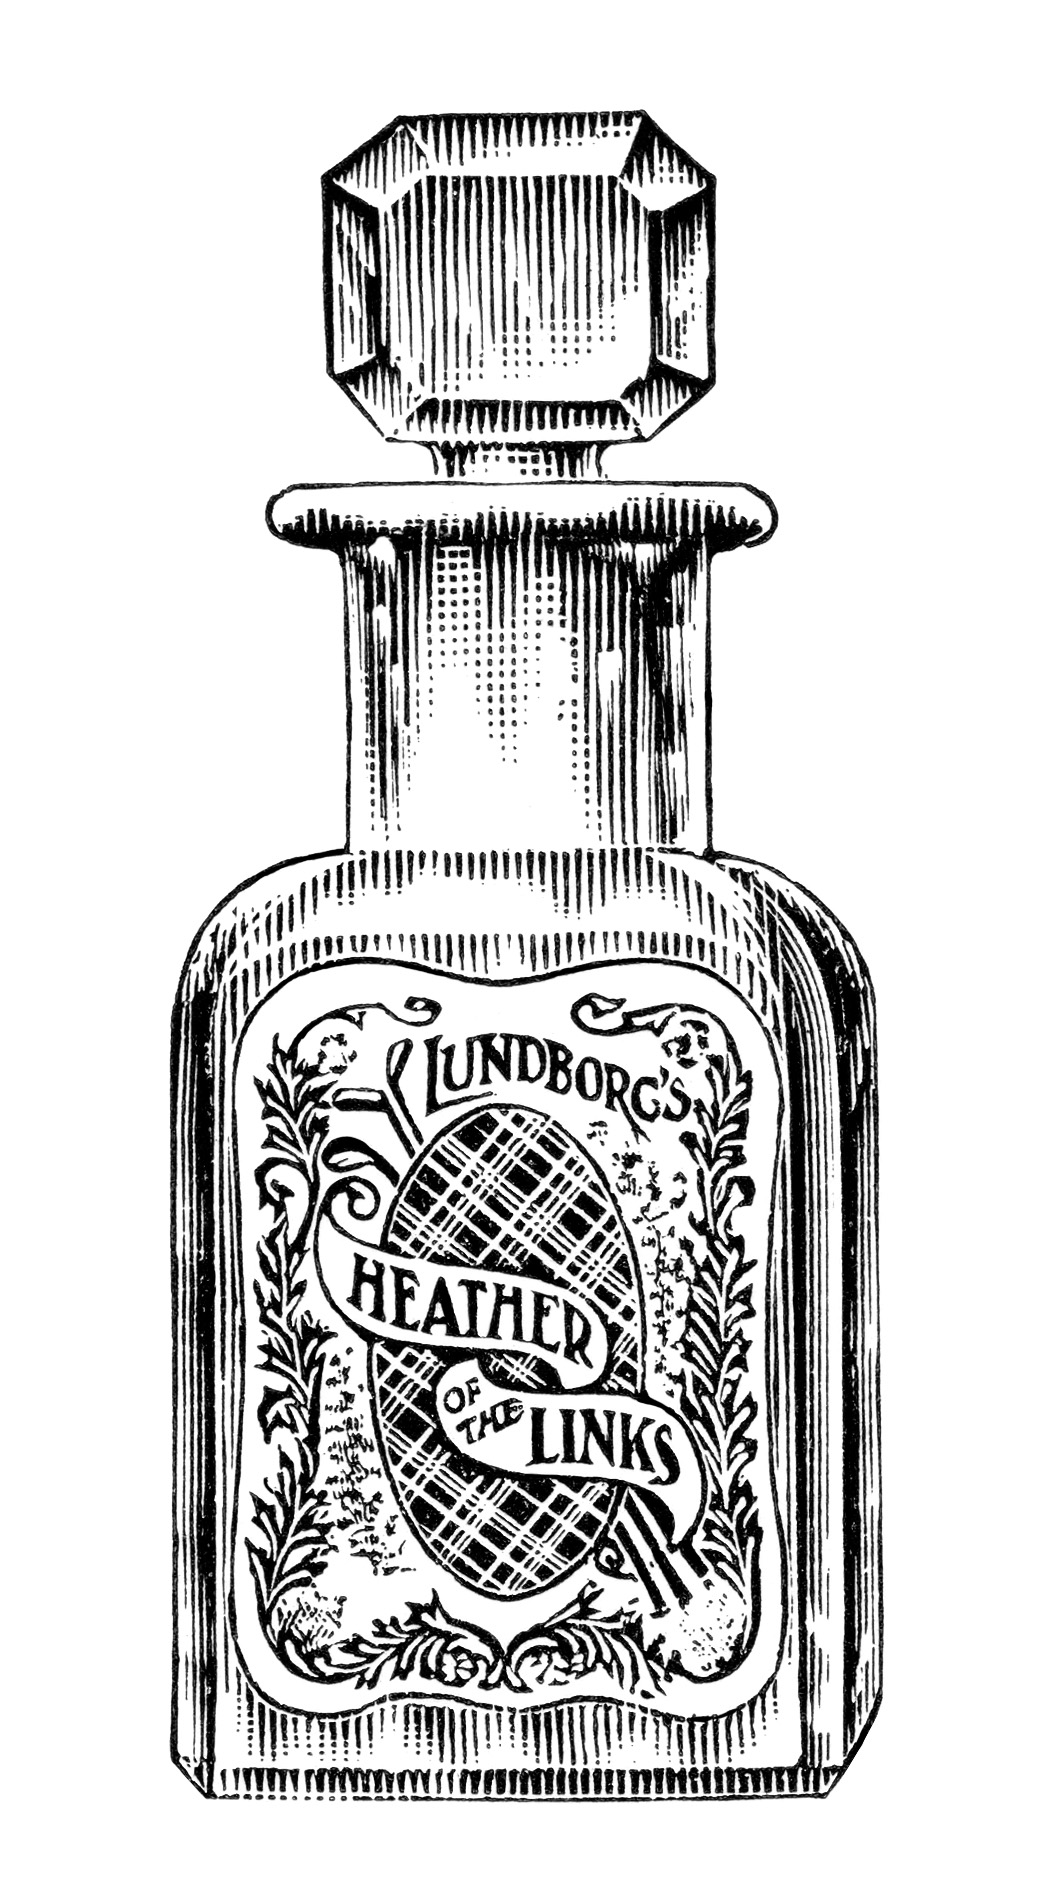 Vintage Perfume Clipart Lundborg Heather Of The Links Antique